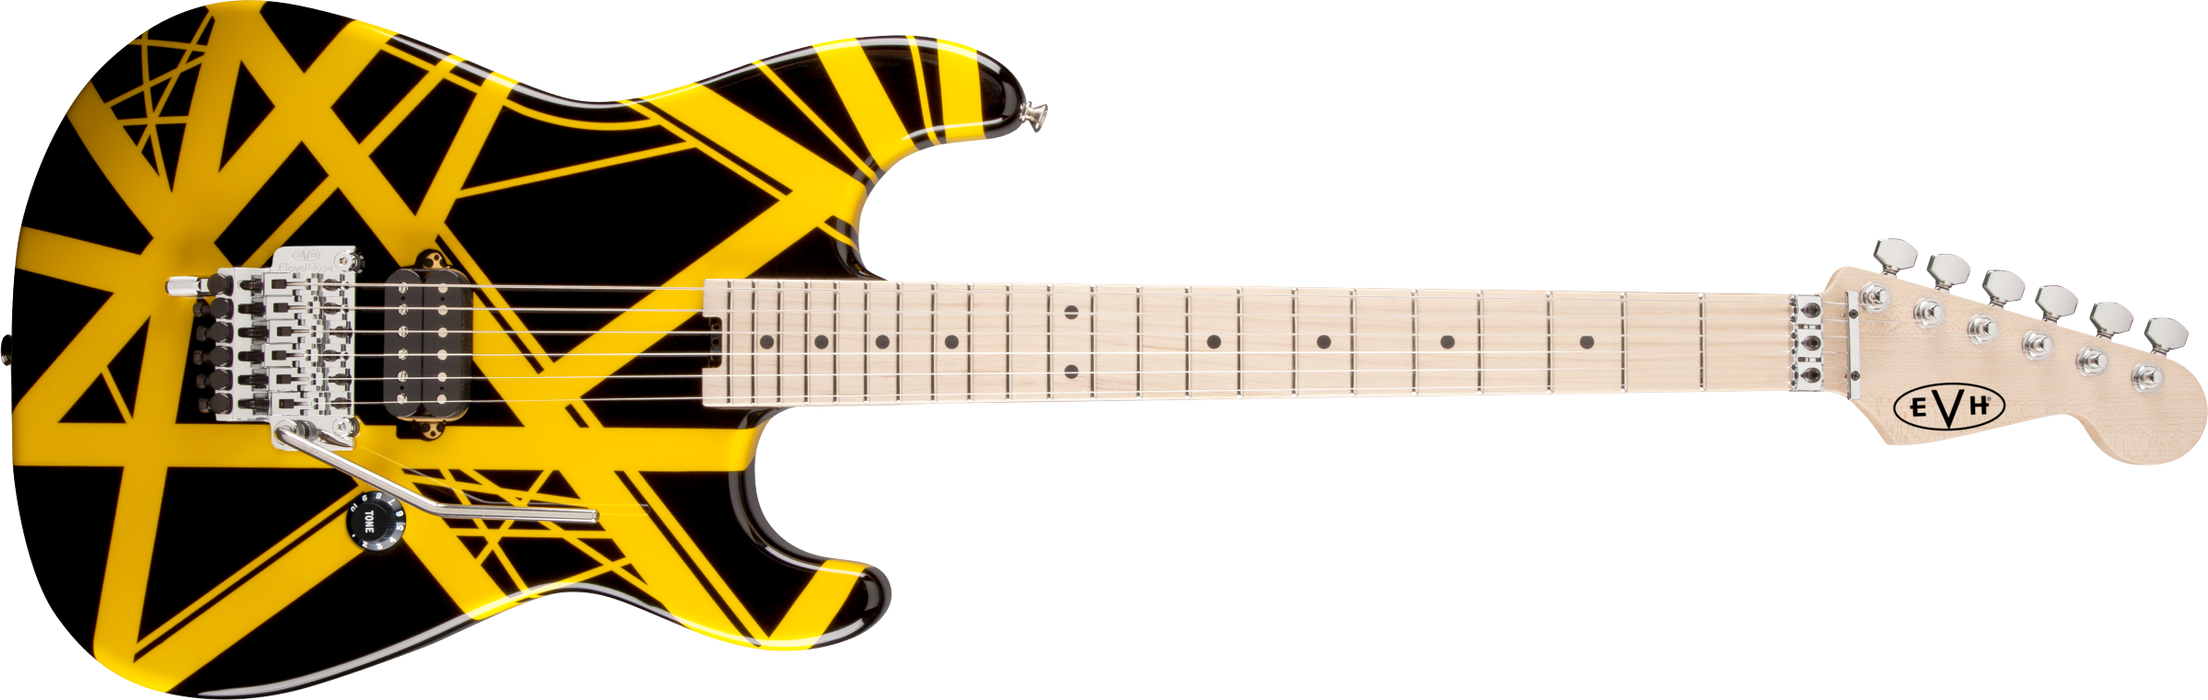 EVH Tribute Striped Guitar in Black & Yellow w/ Floyd Rose Electric Guitar, Ex Display - Fair Deal Music